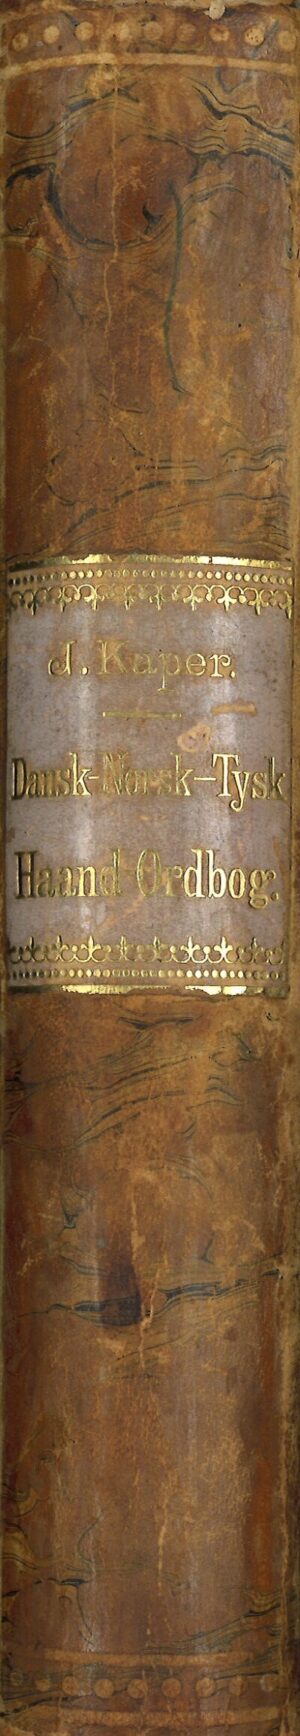 Bokforside - Dansk norsk tysk ordbog rygg